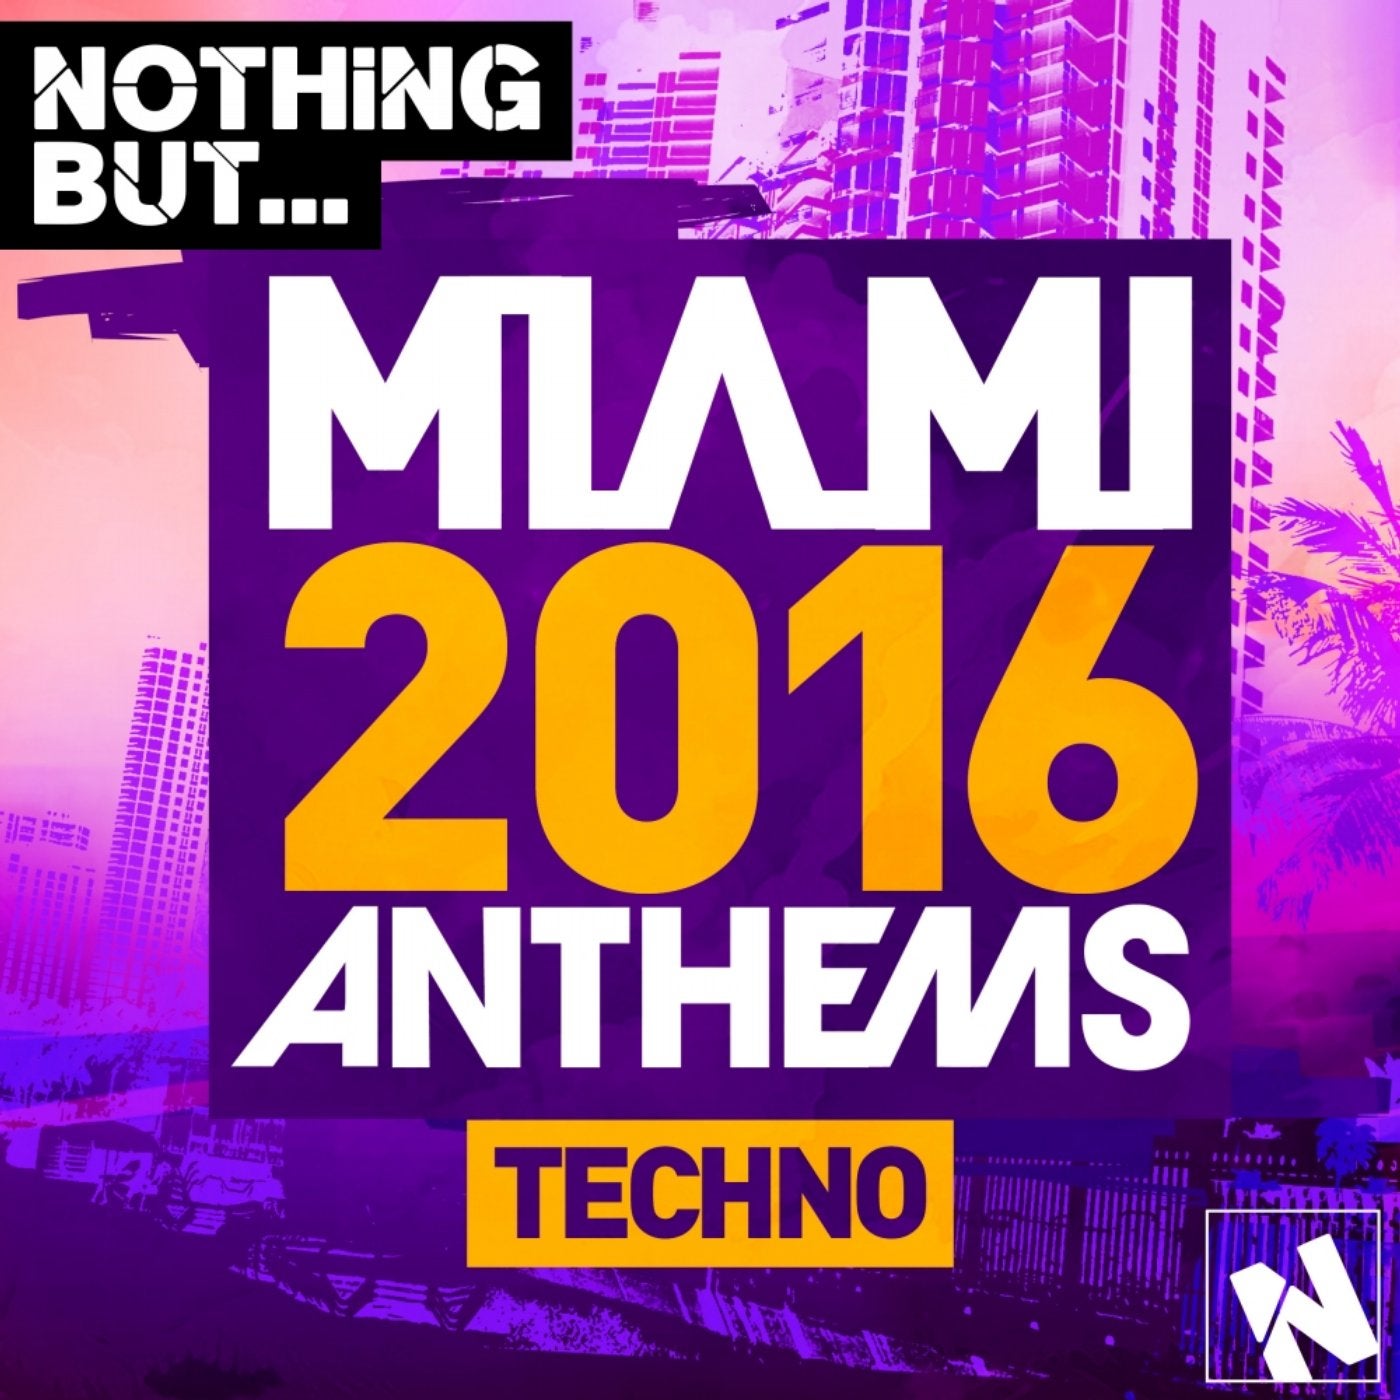 Nothing But. Miami Techno 2016